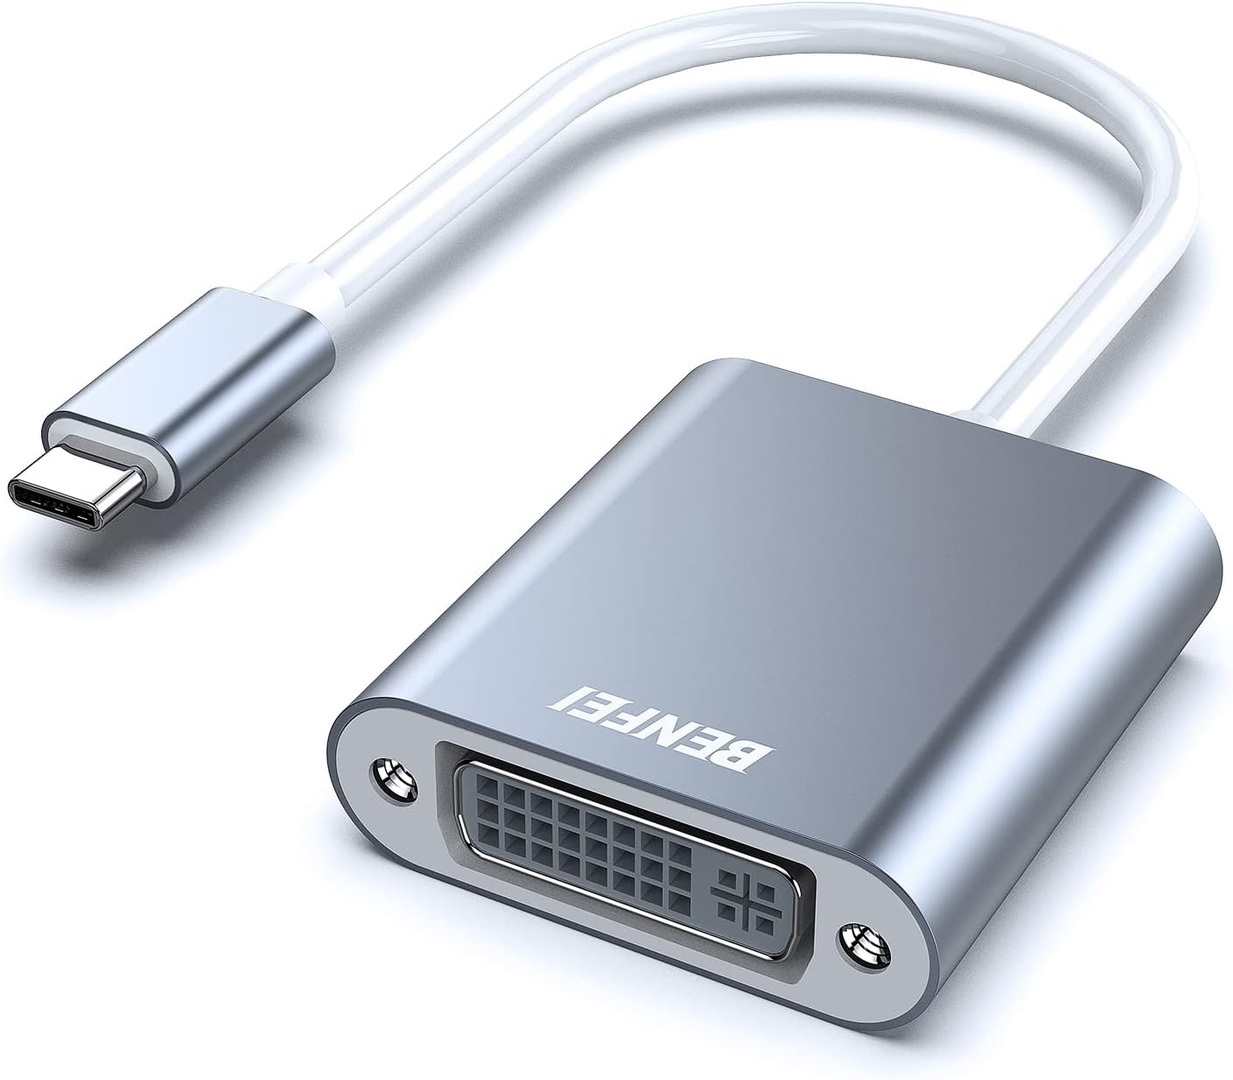 accesorios para electronica - BENFEI USB C TO DVI ADAPTER | TYPE-C TO DVI ADAPTER